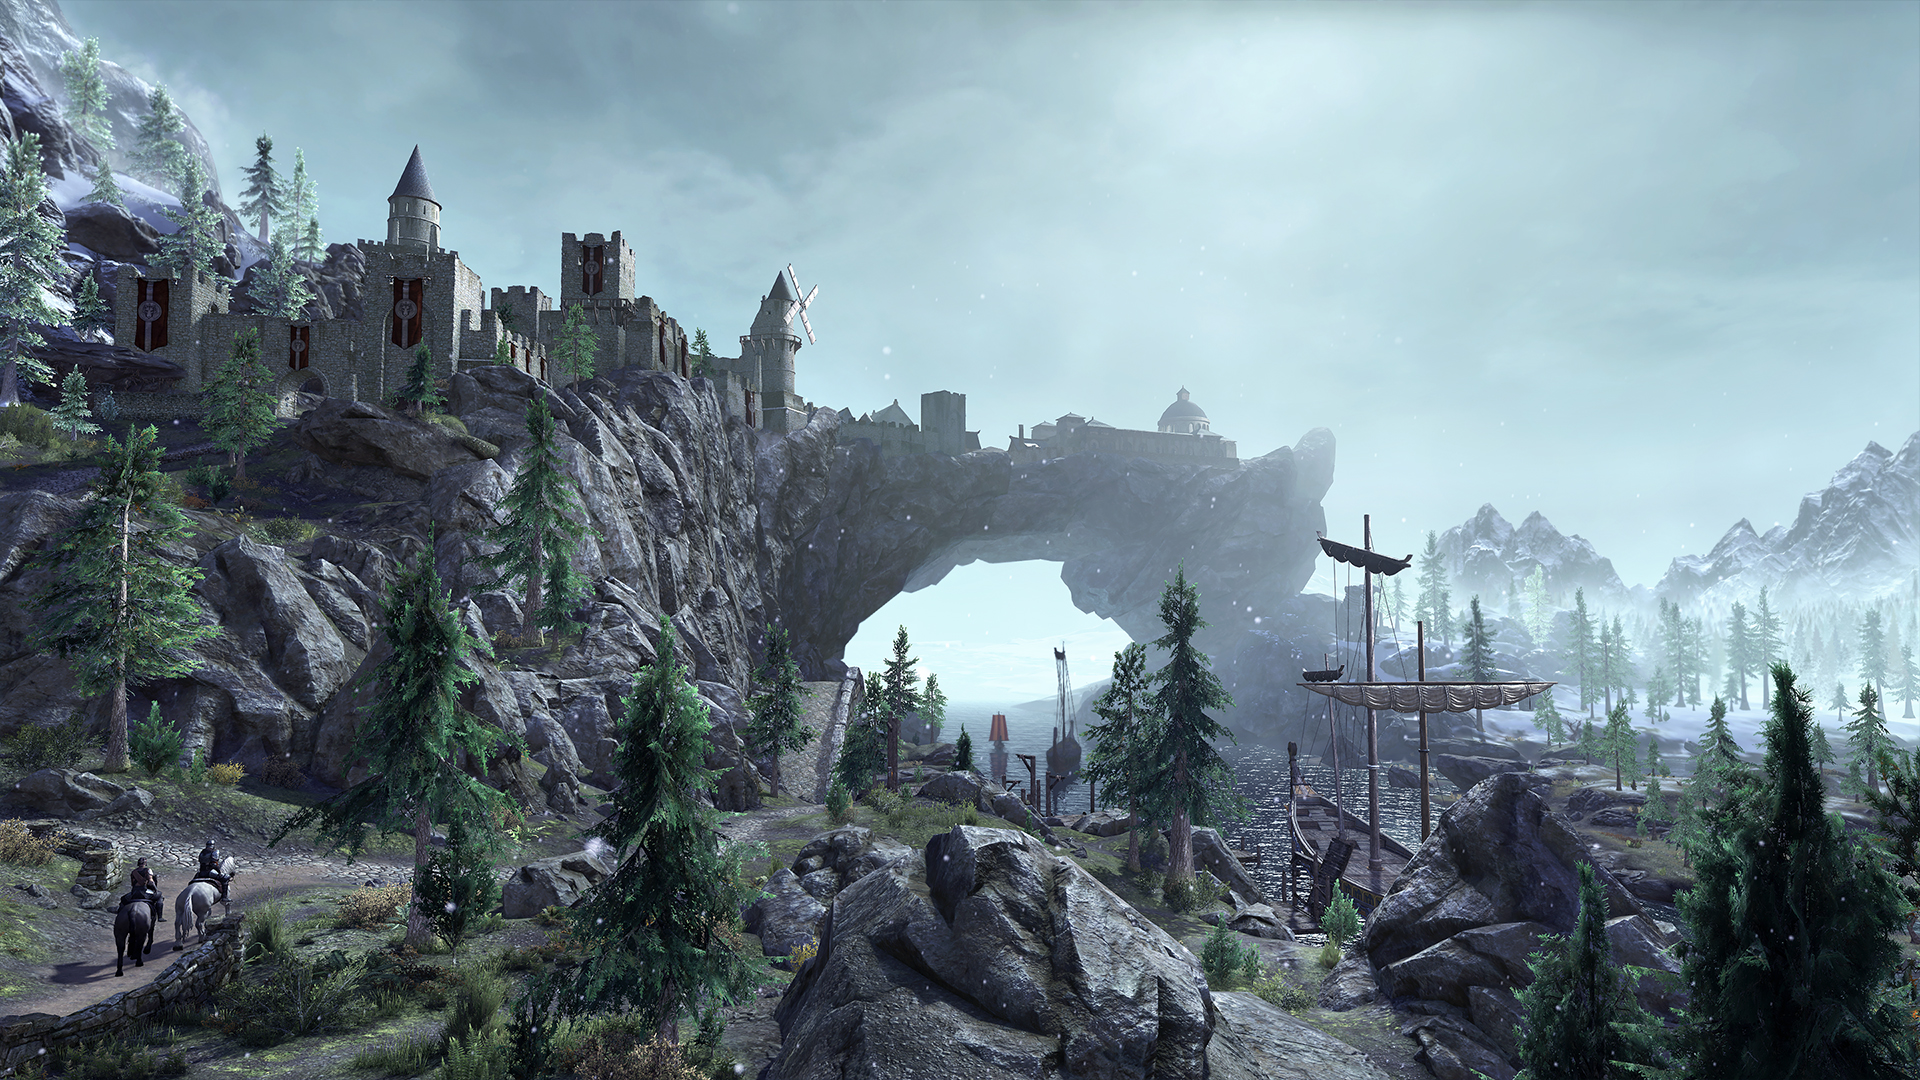 Bethesda video games - Skyrim video game landscape